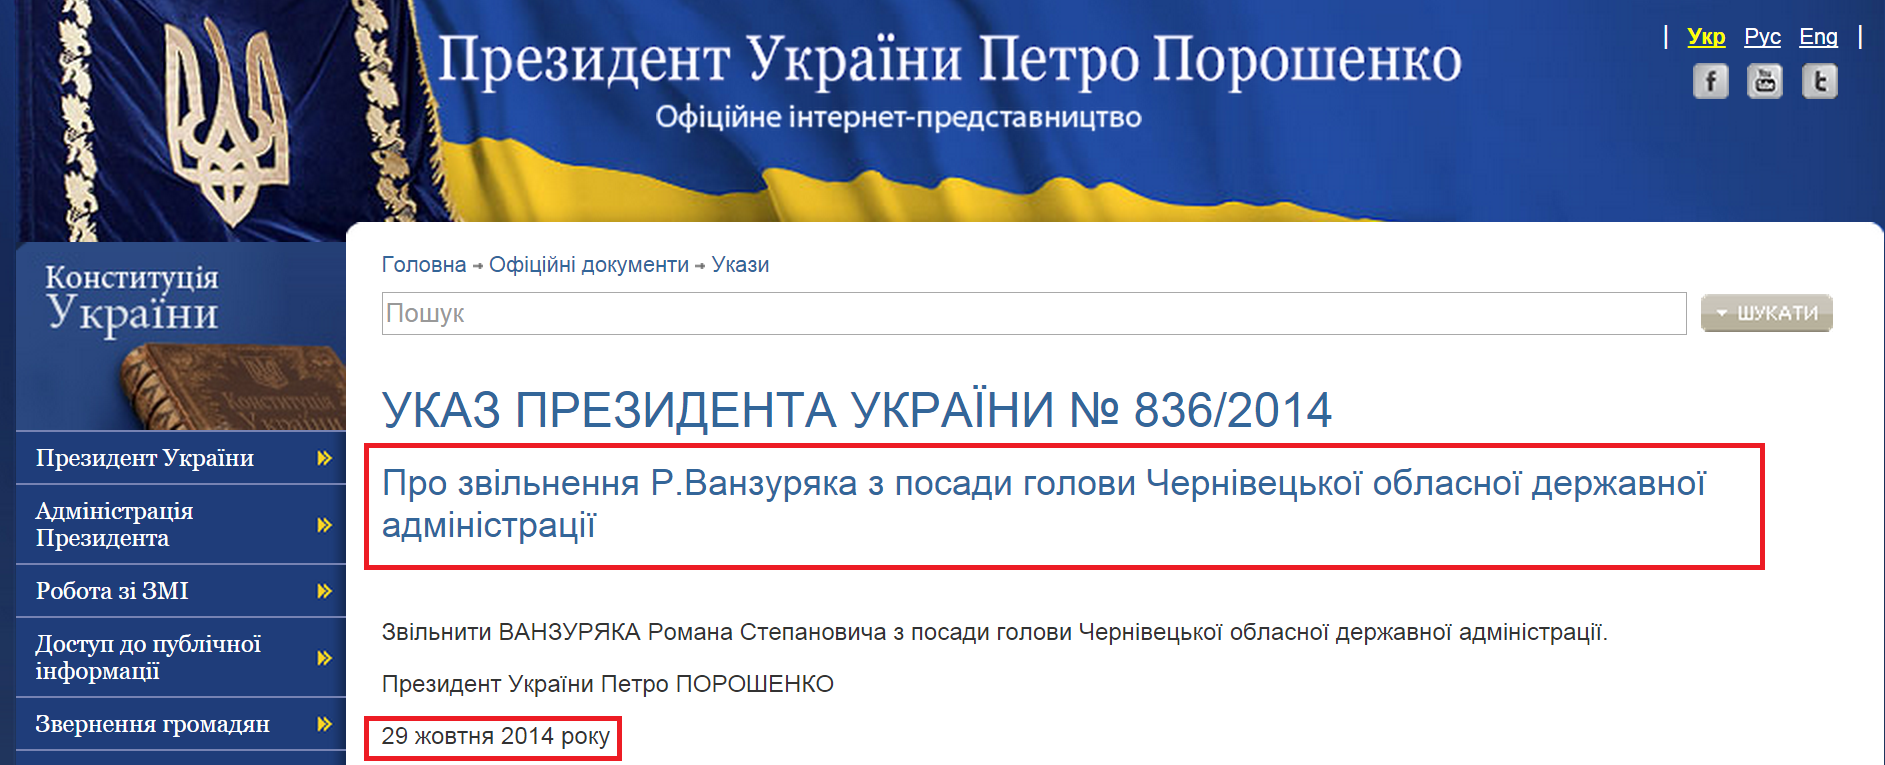 http://www.president.gov.ua/documents/18343.html